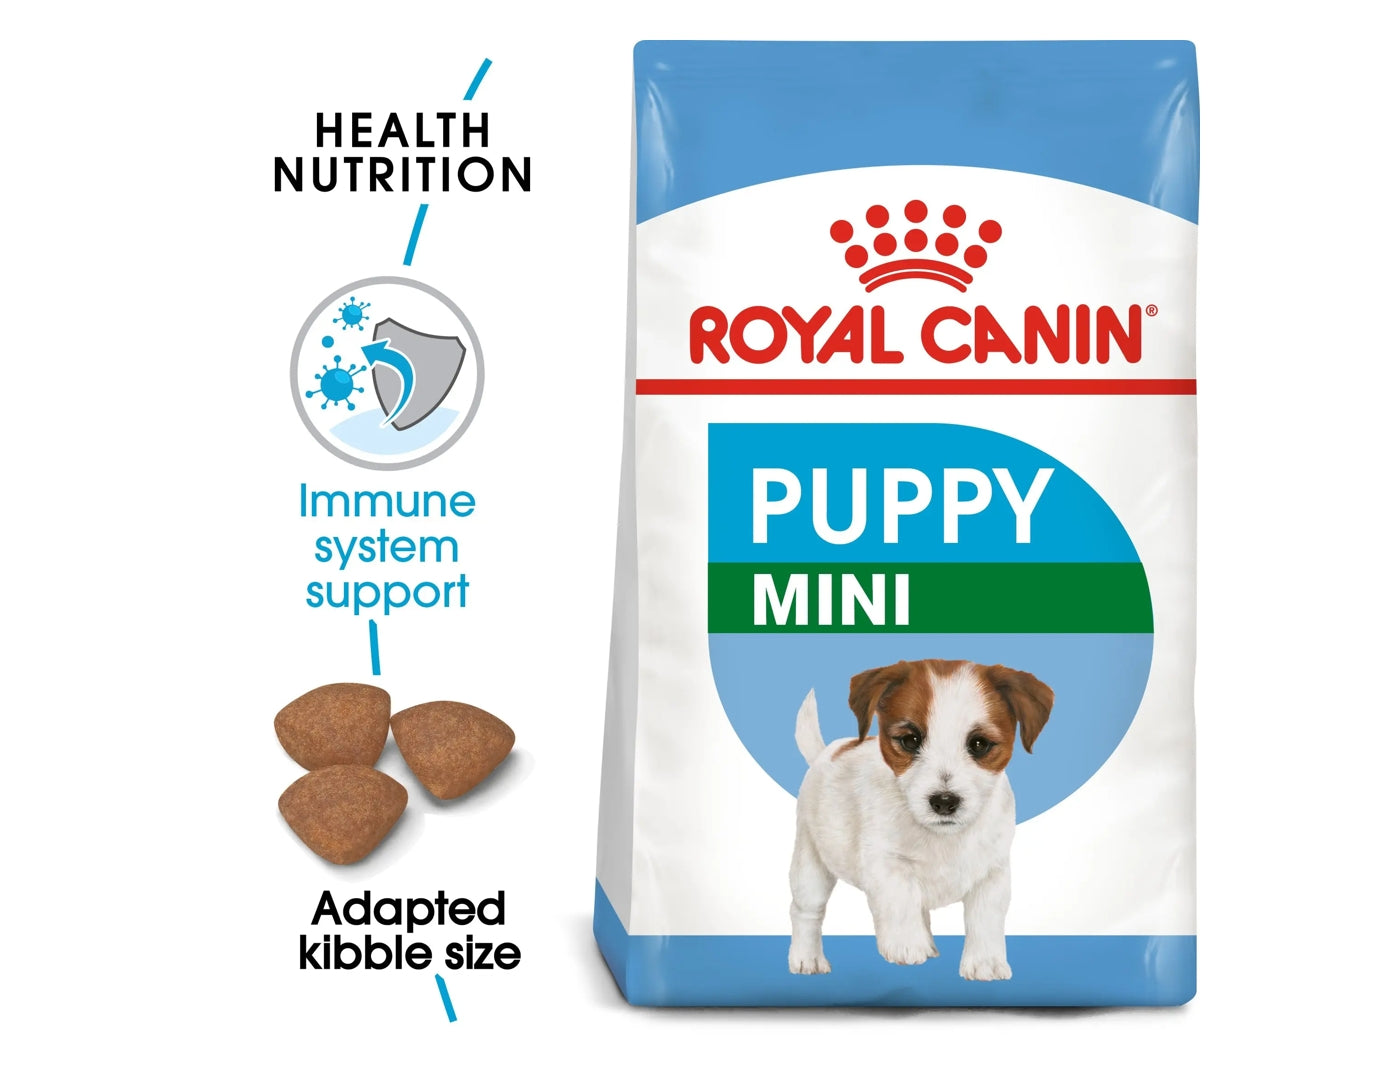 Royal Canin - Mini Puppy